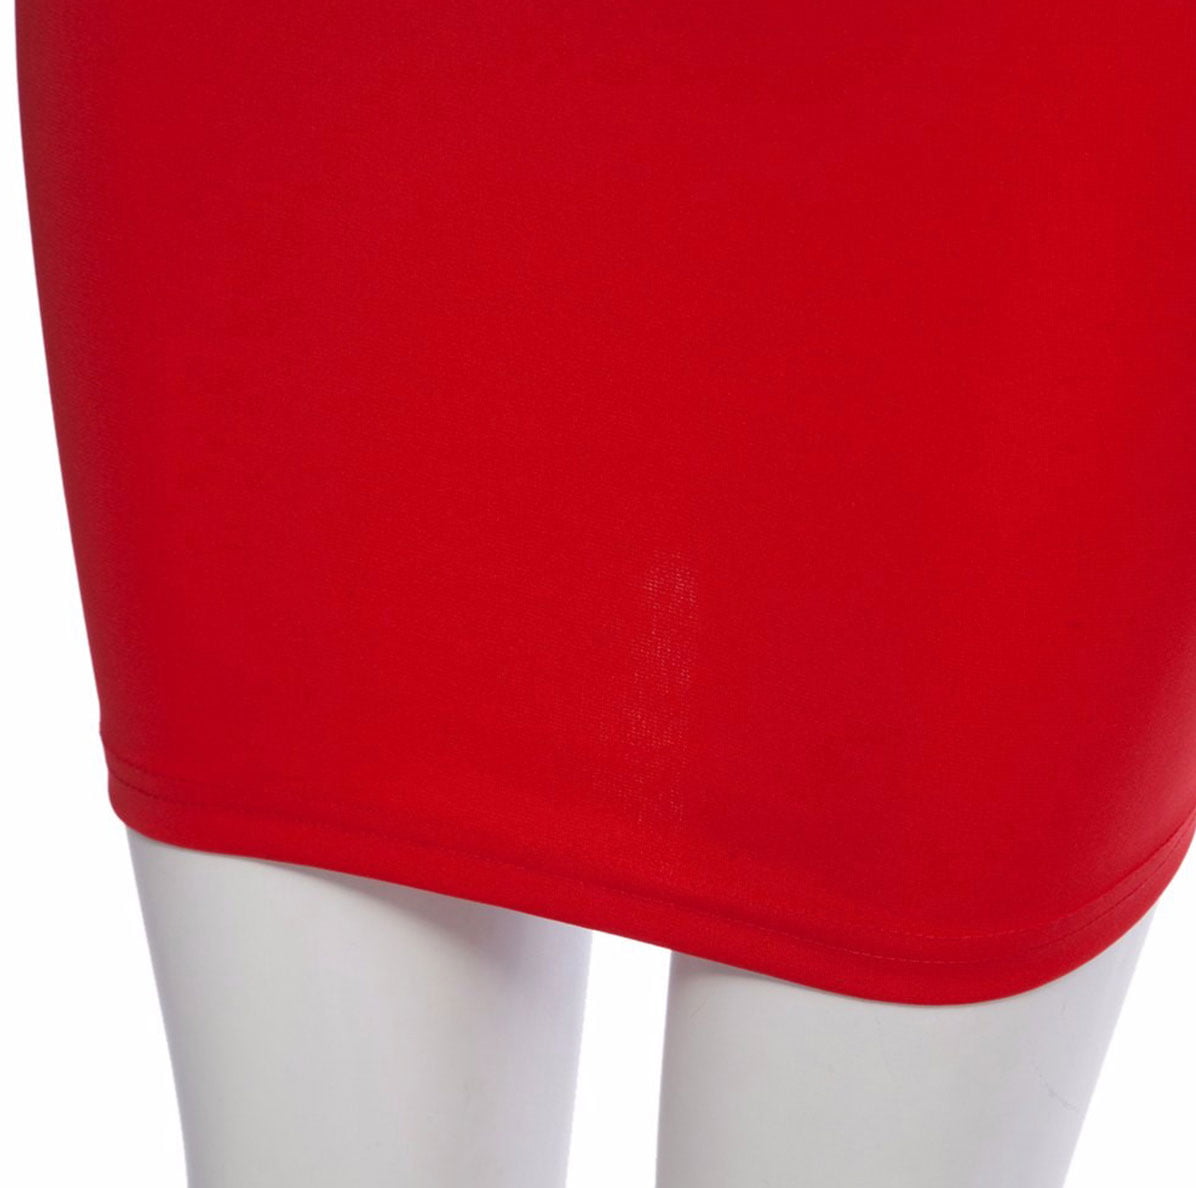 M0176 red4 Party Dresses maureens.com boutique